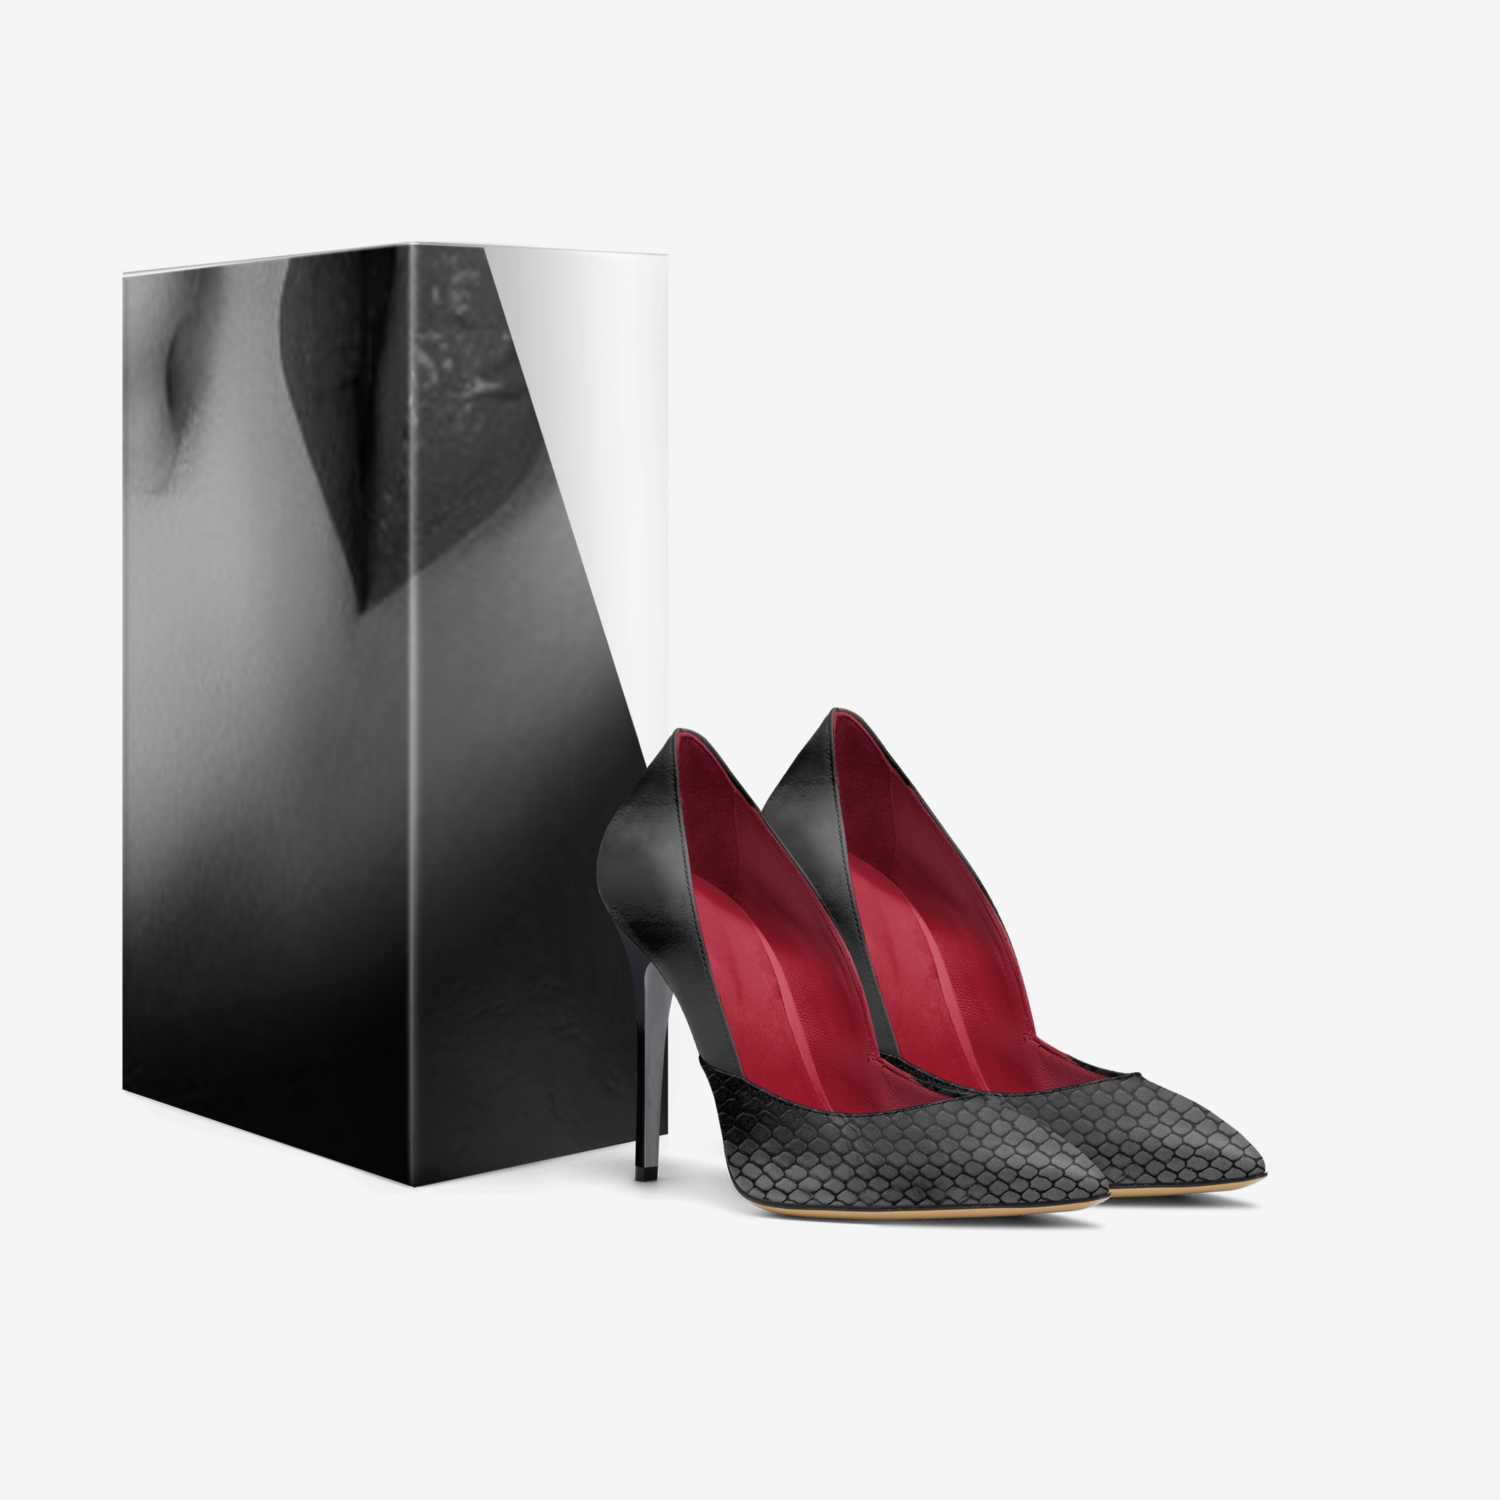 Sasha Monroe custom made in Italy shoes by Bena Klier | Box view